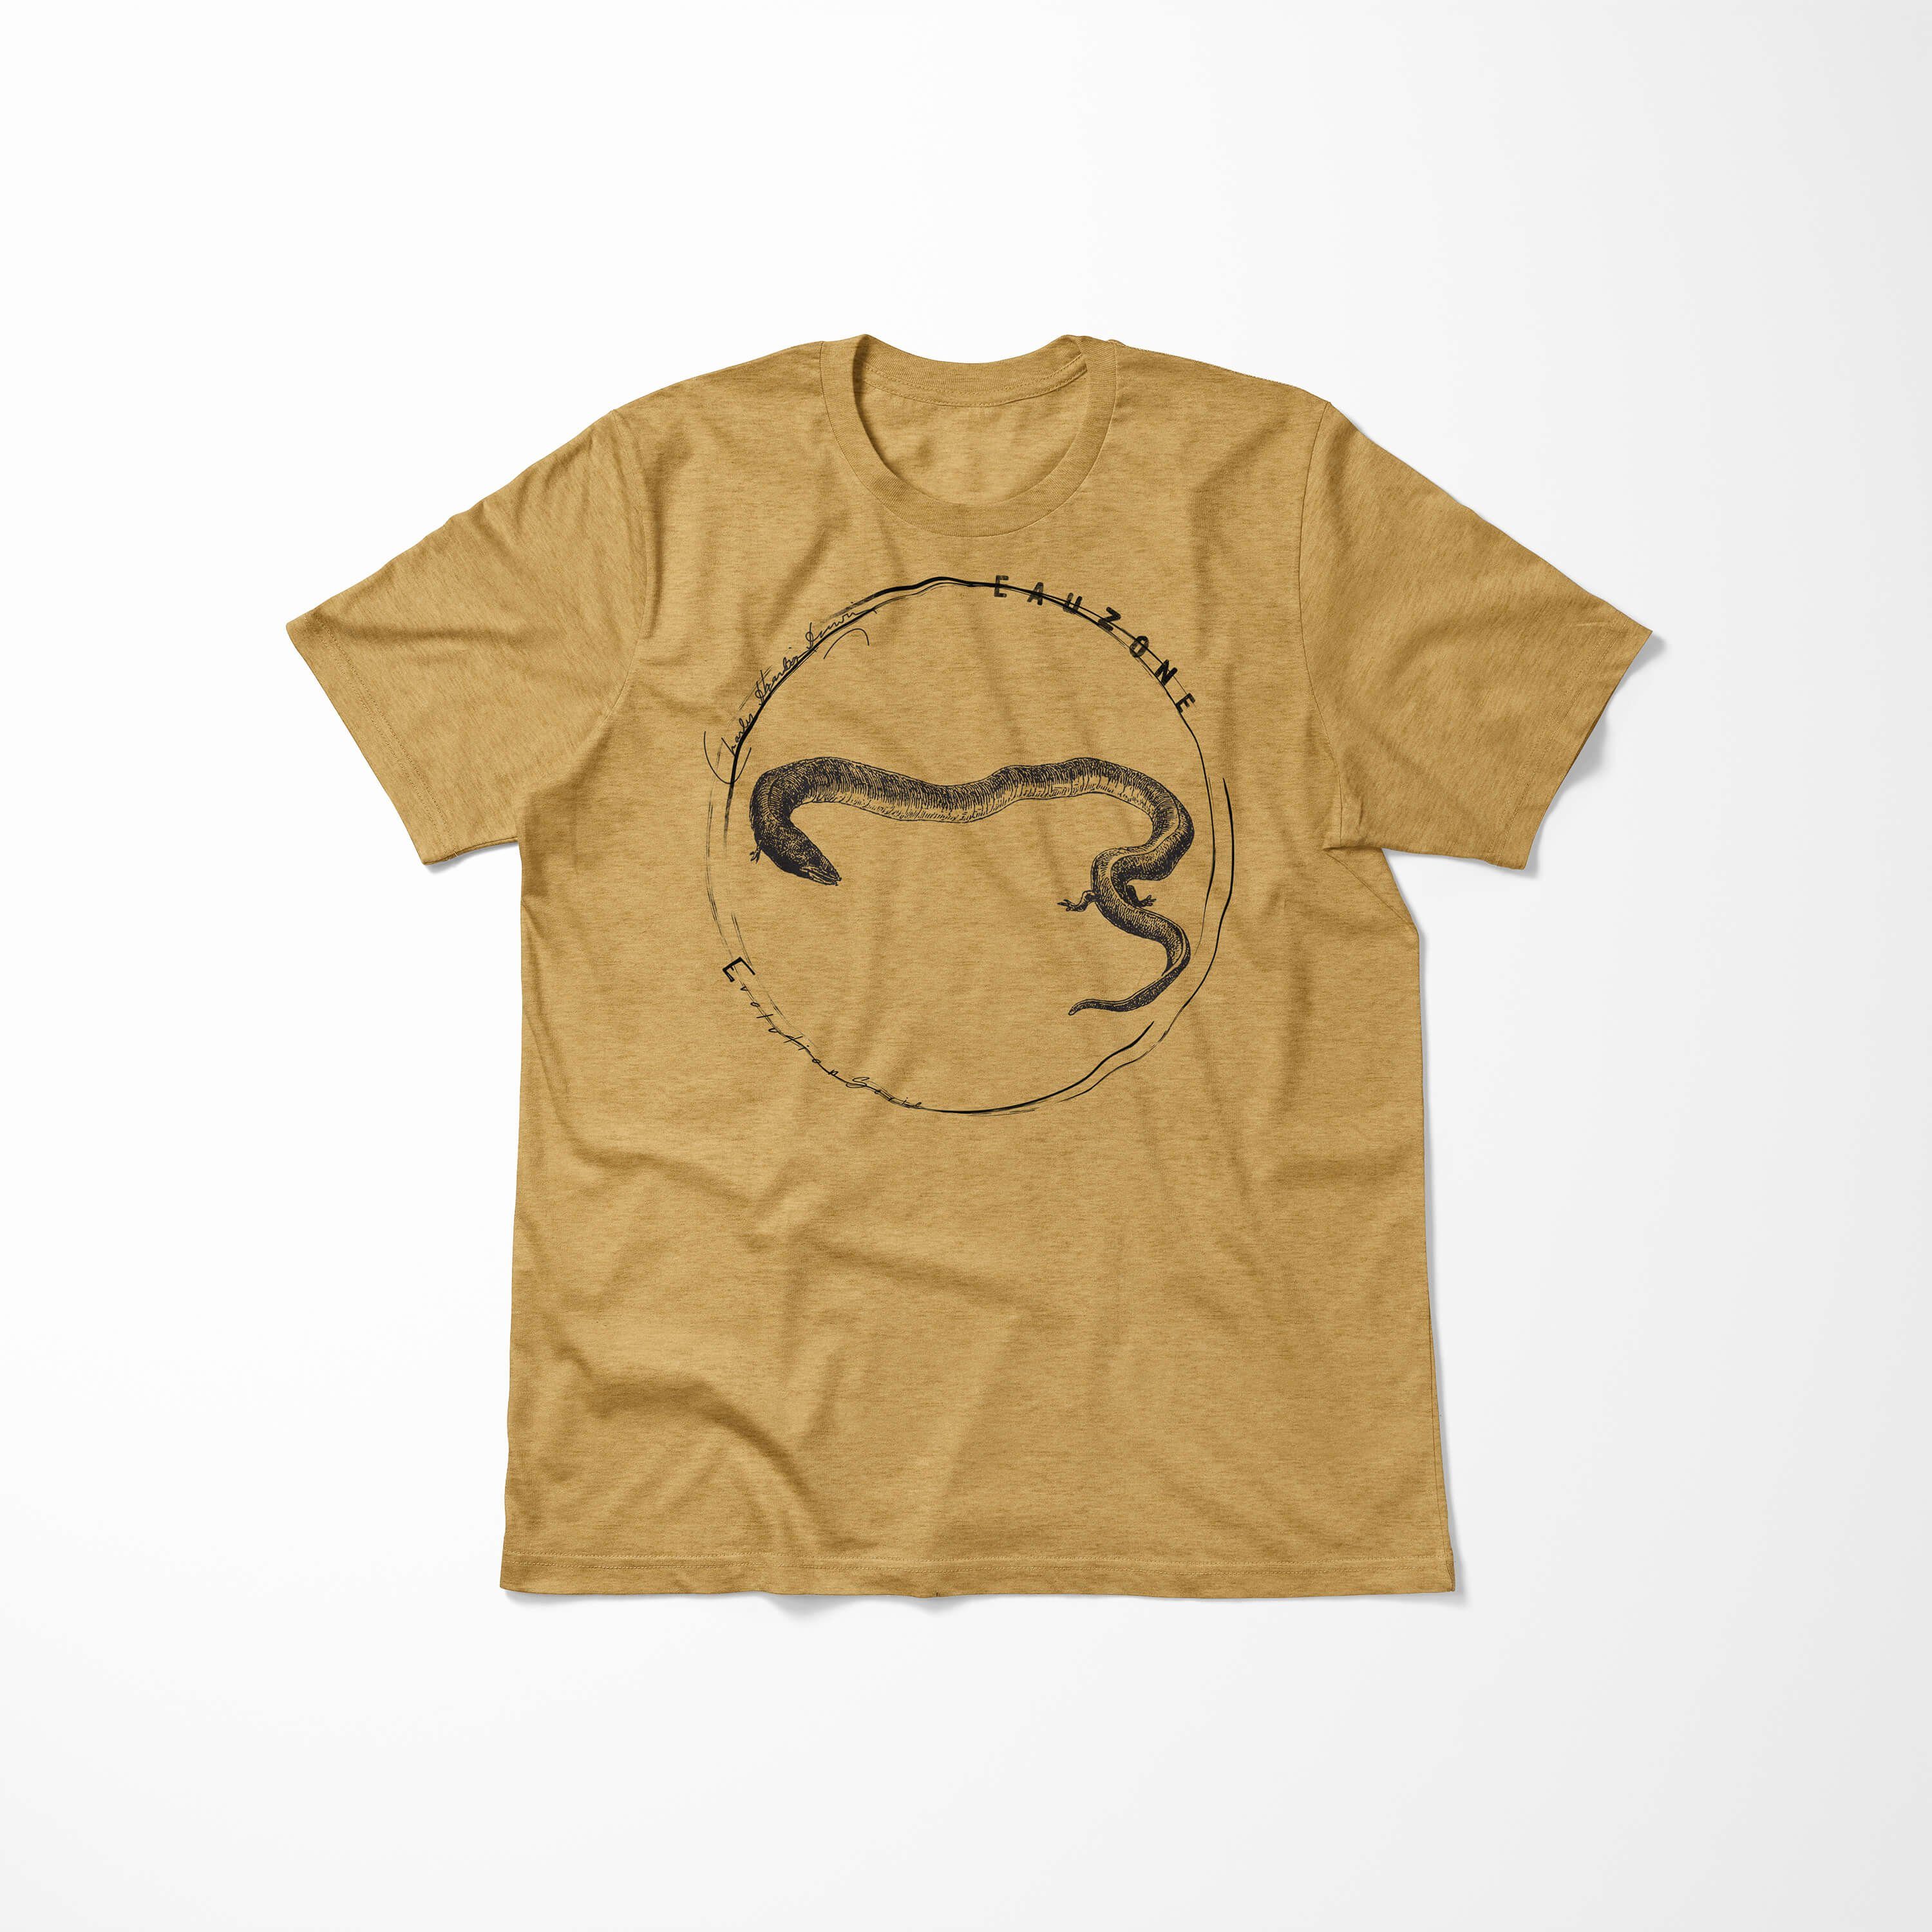 Antique Herren T-Shirt T-Shirt Gold Amphia Sinus Art Evolution